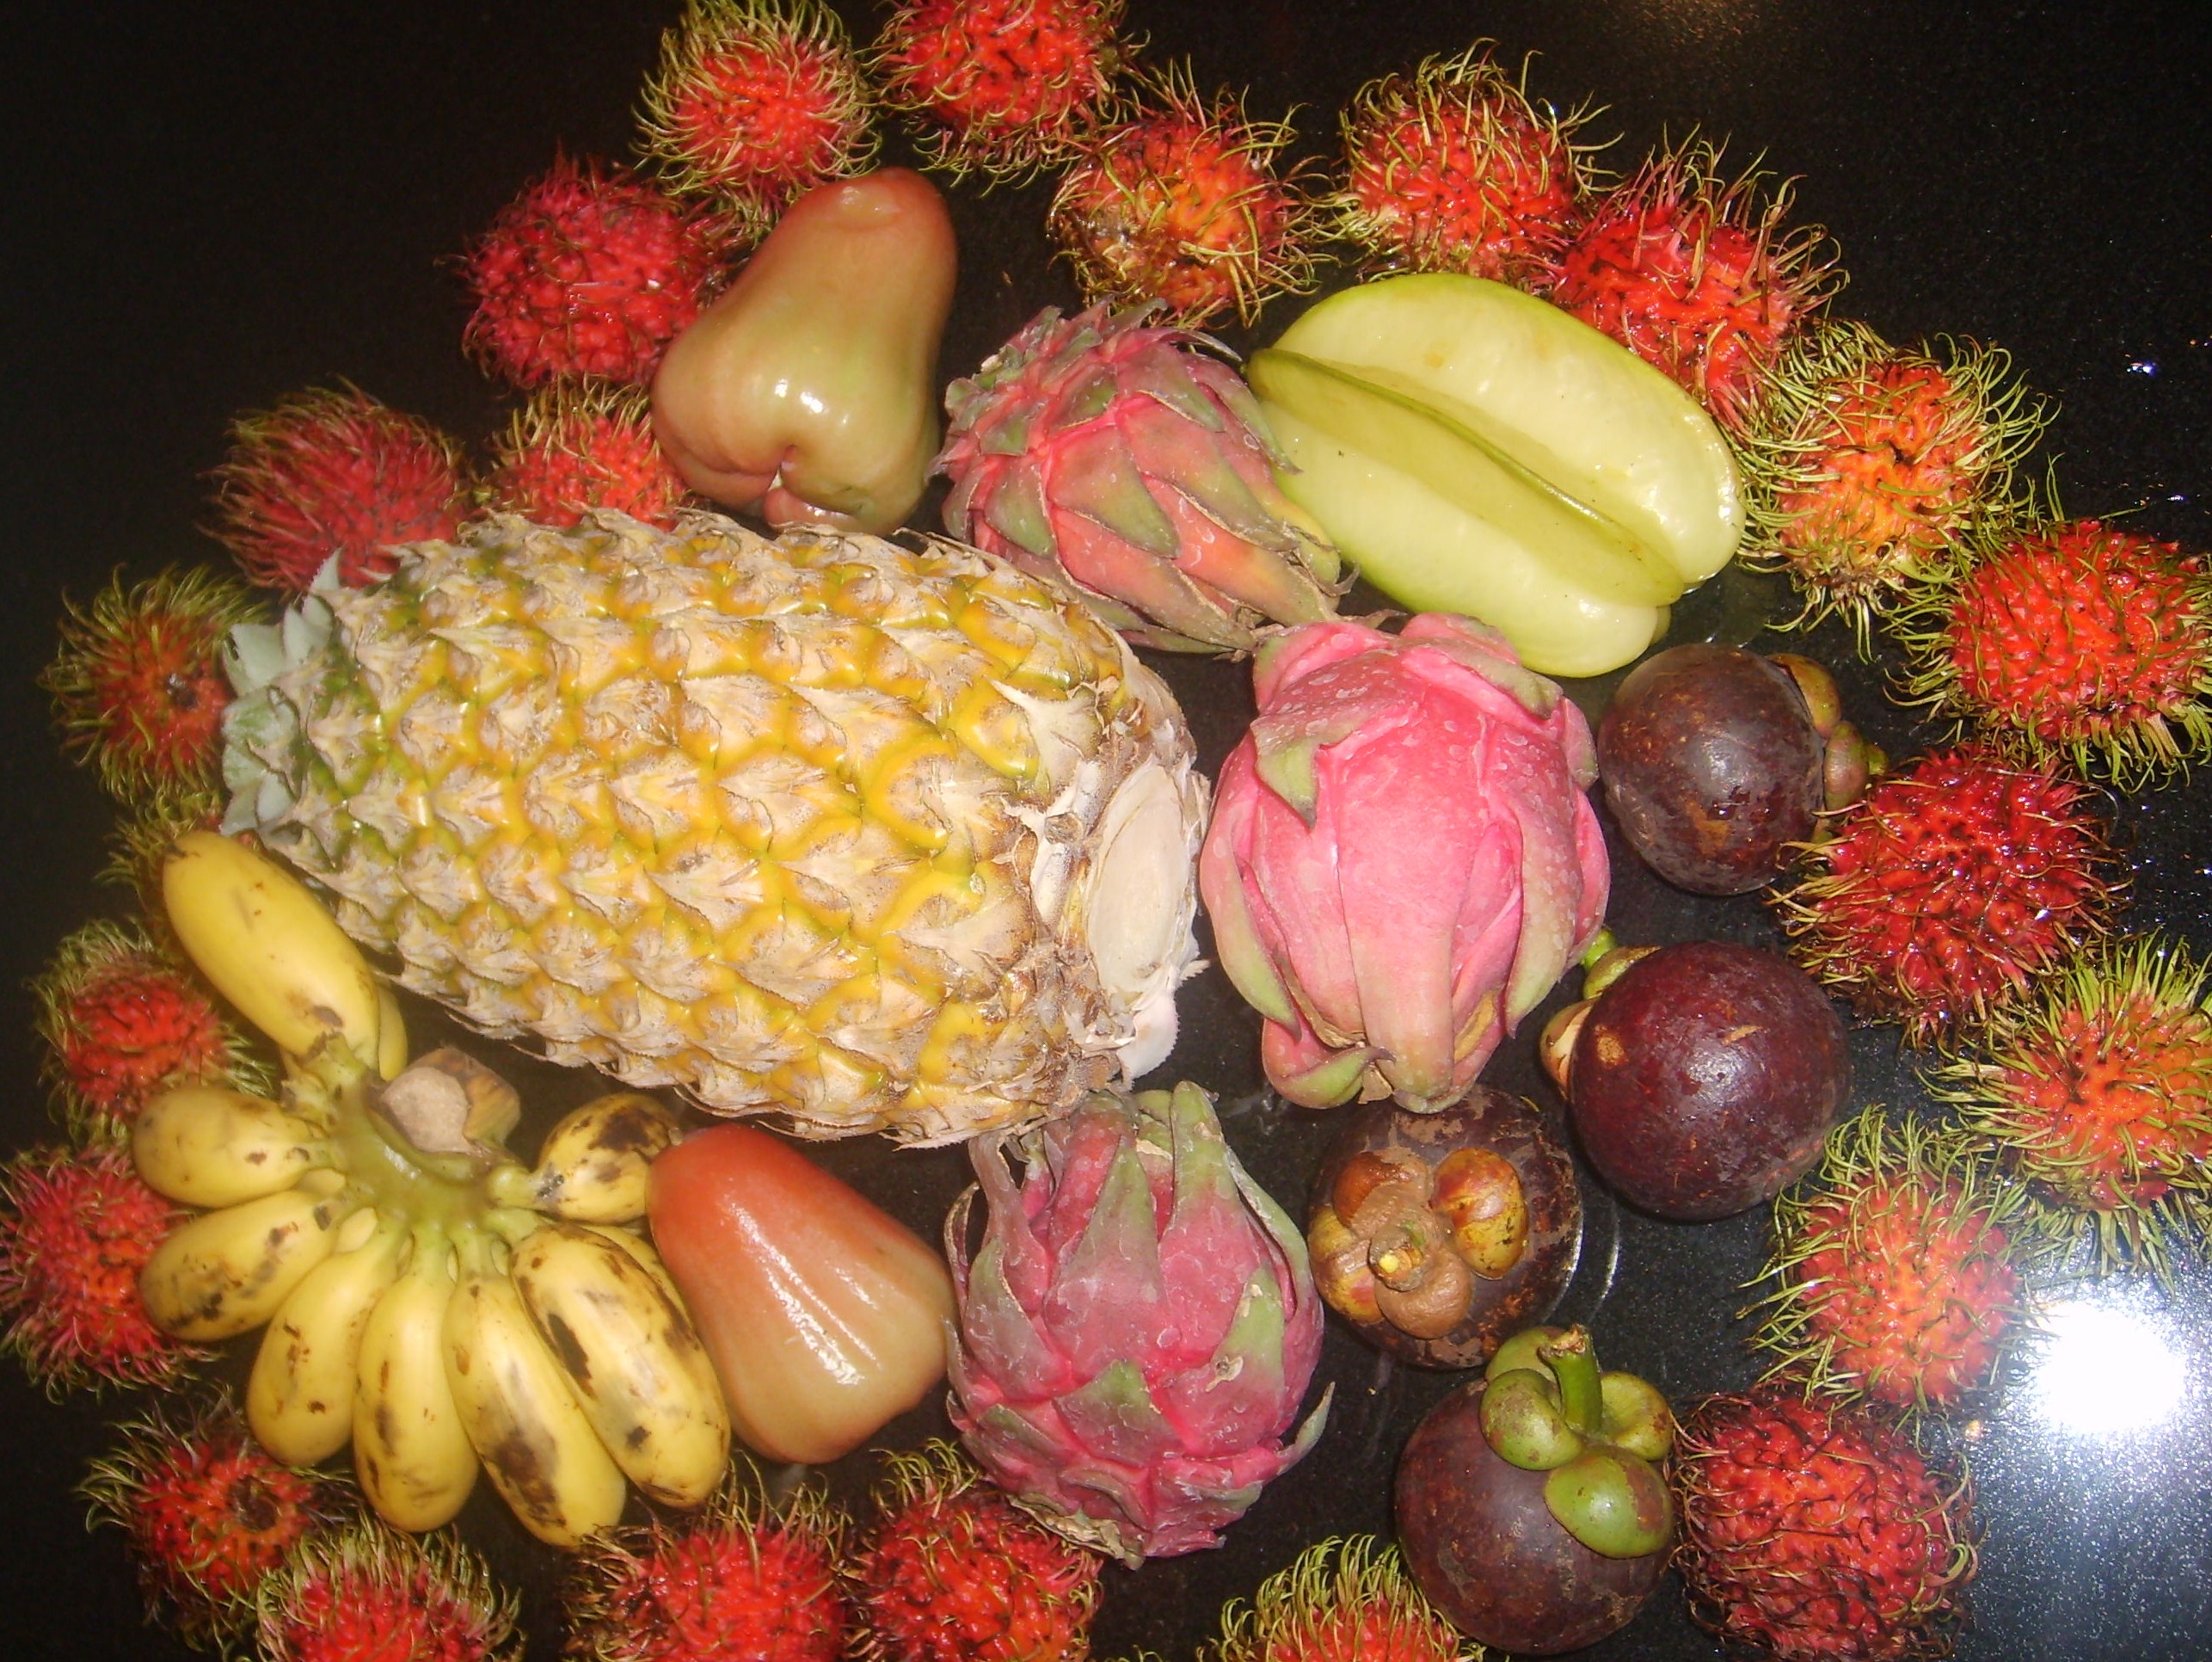 фрукты тайланда фото с названиями и описанием